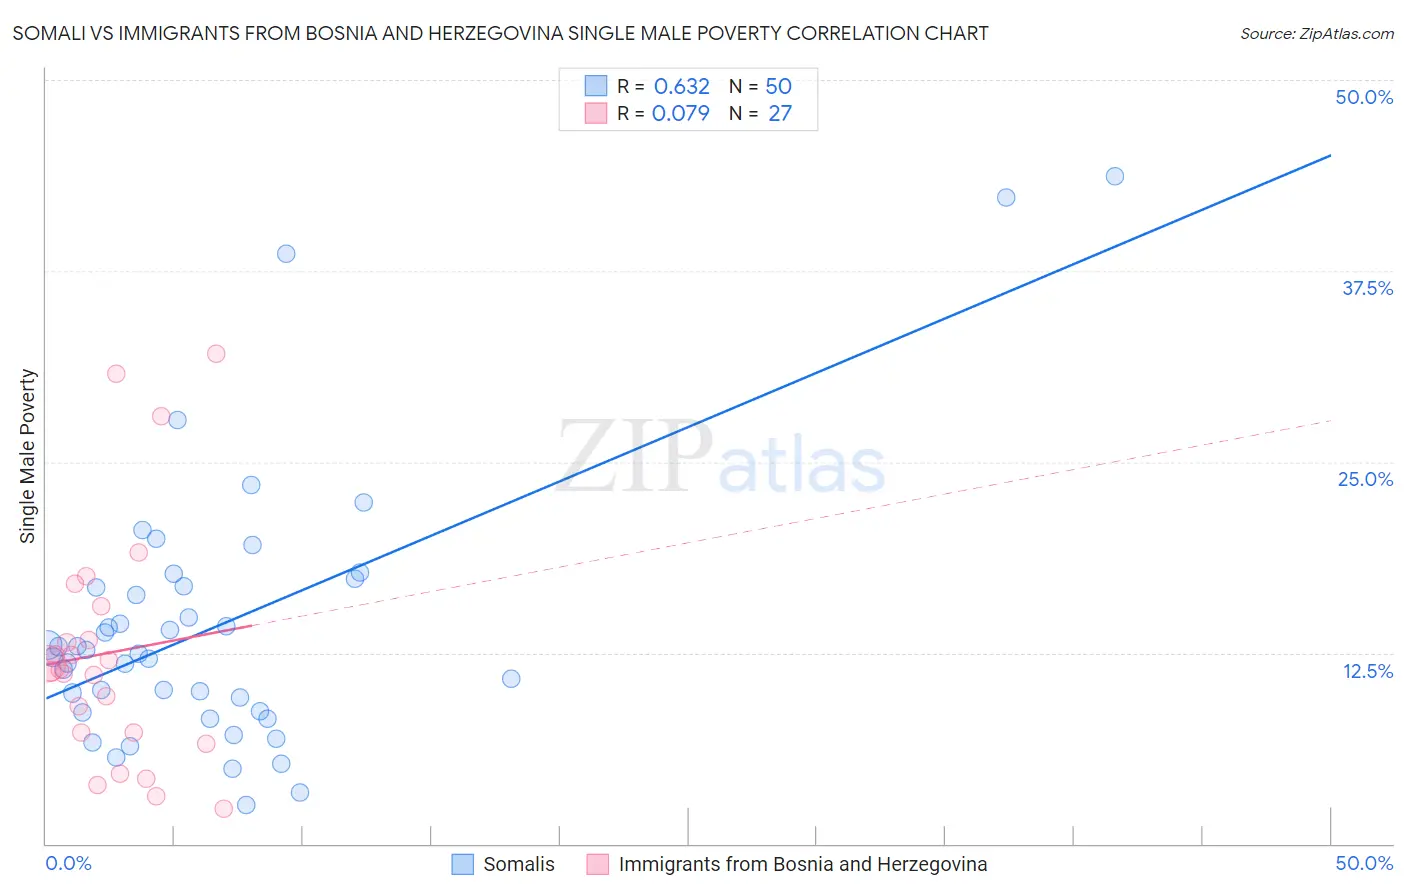 Somali vs Immigrants from Bosnia and Herzegovina Single Male Poverty